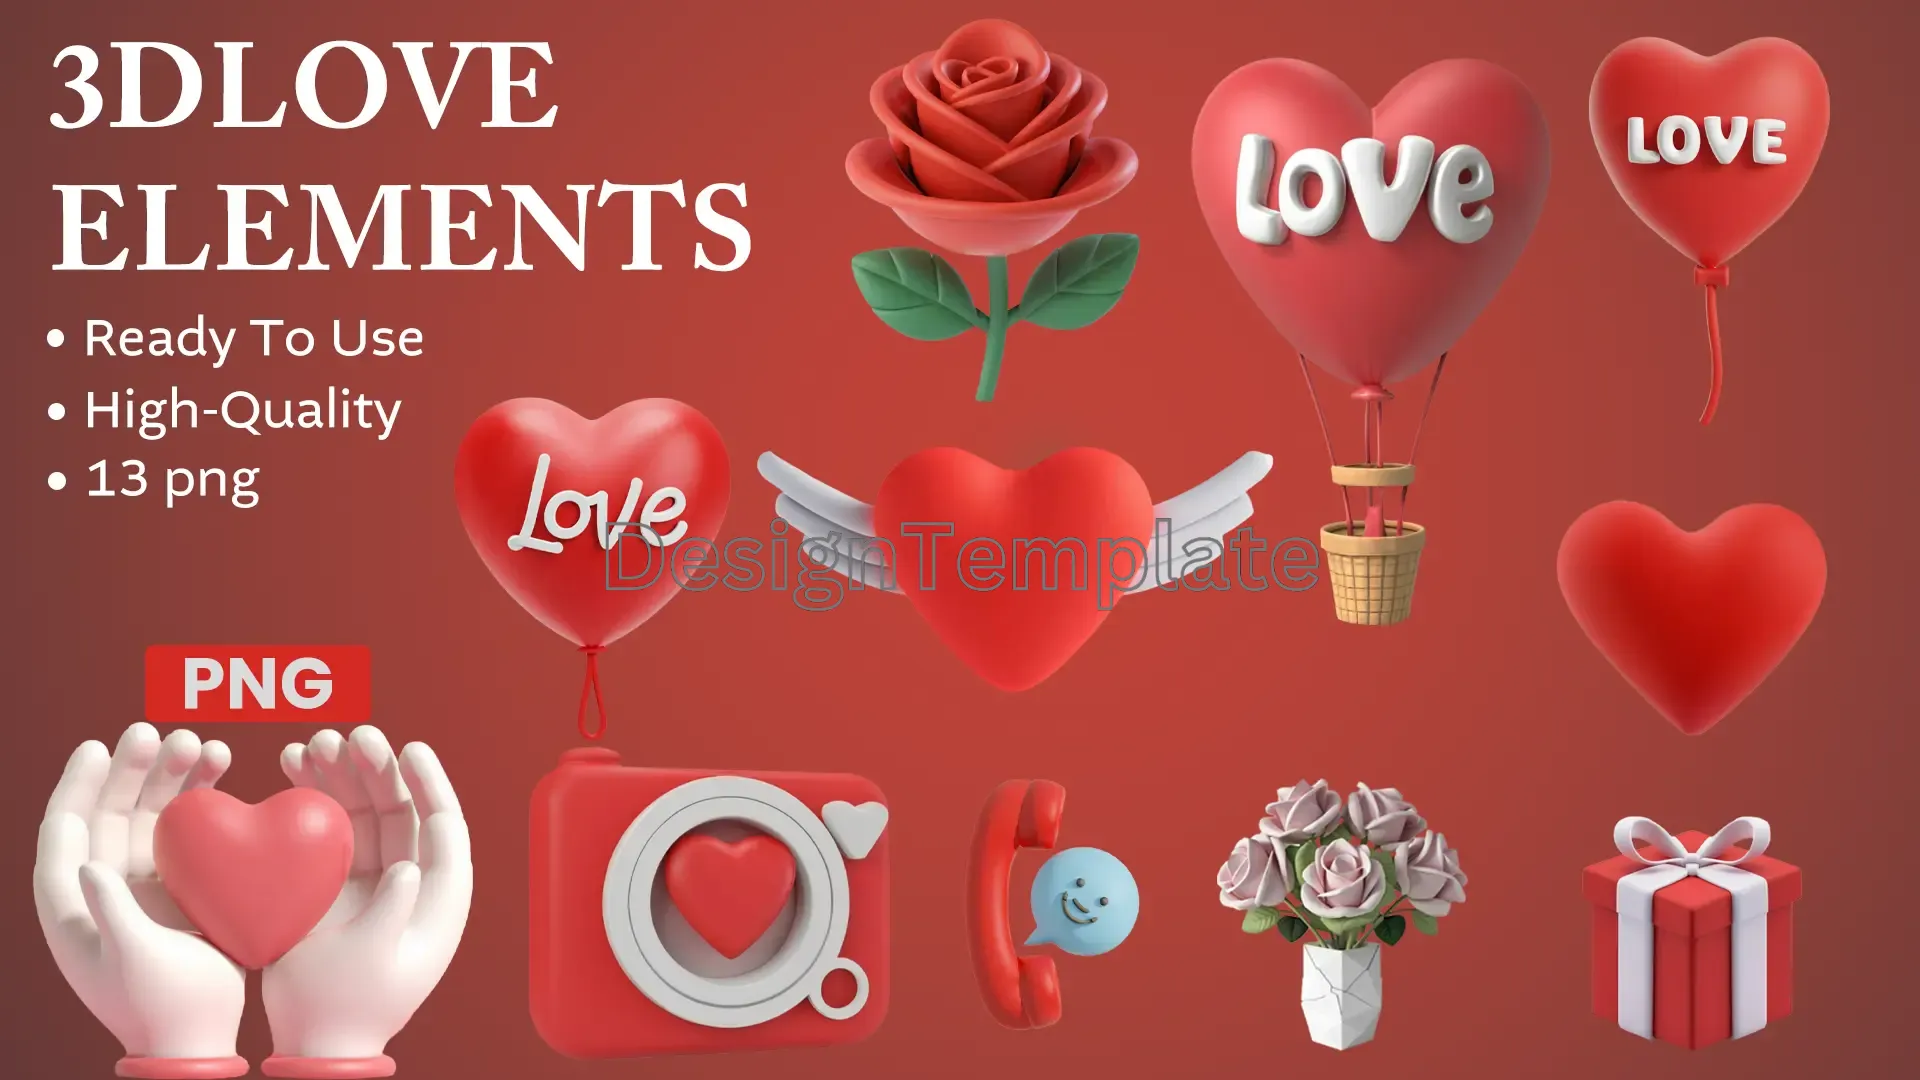 Beautiful Love Theme 3D Elements Pack